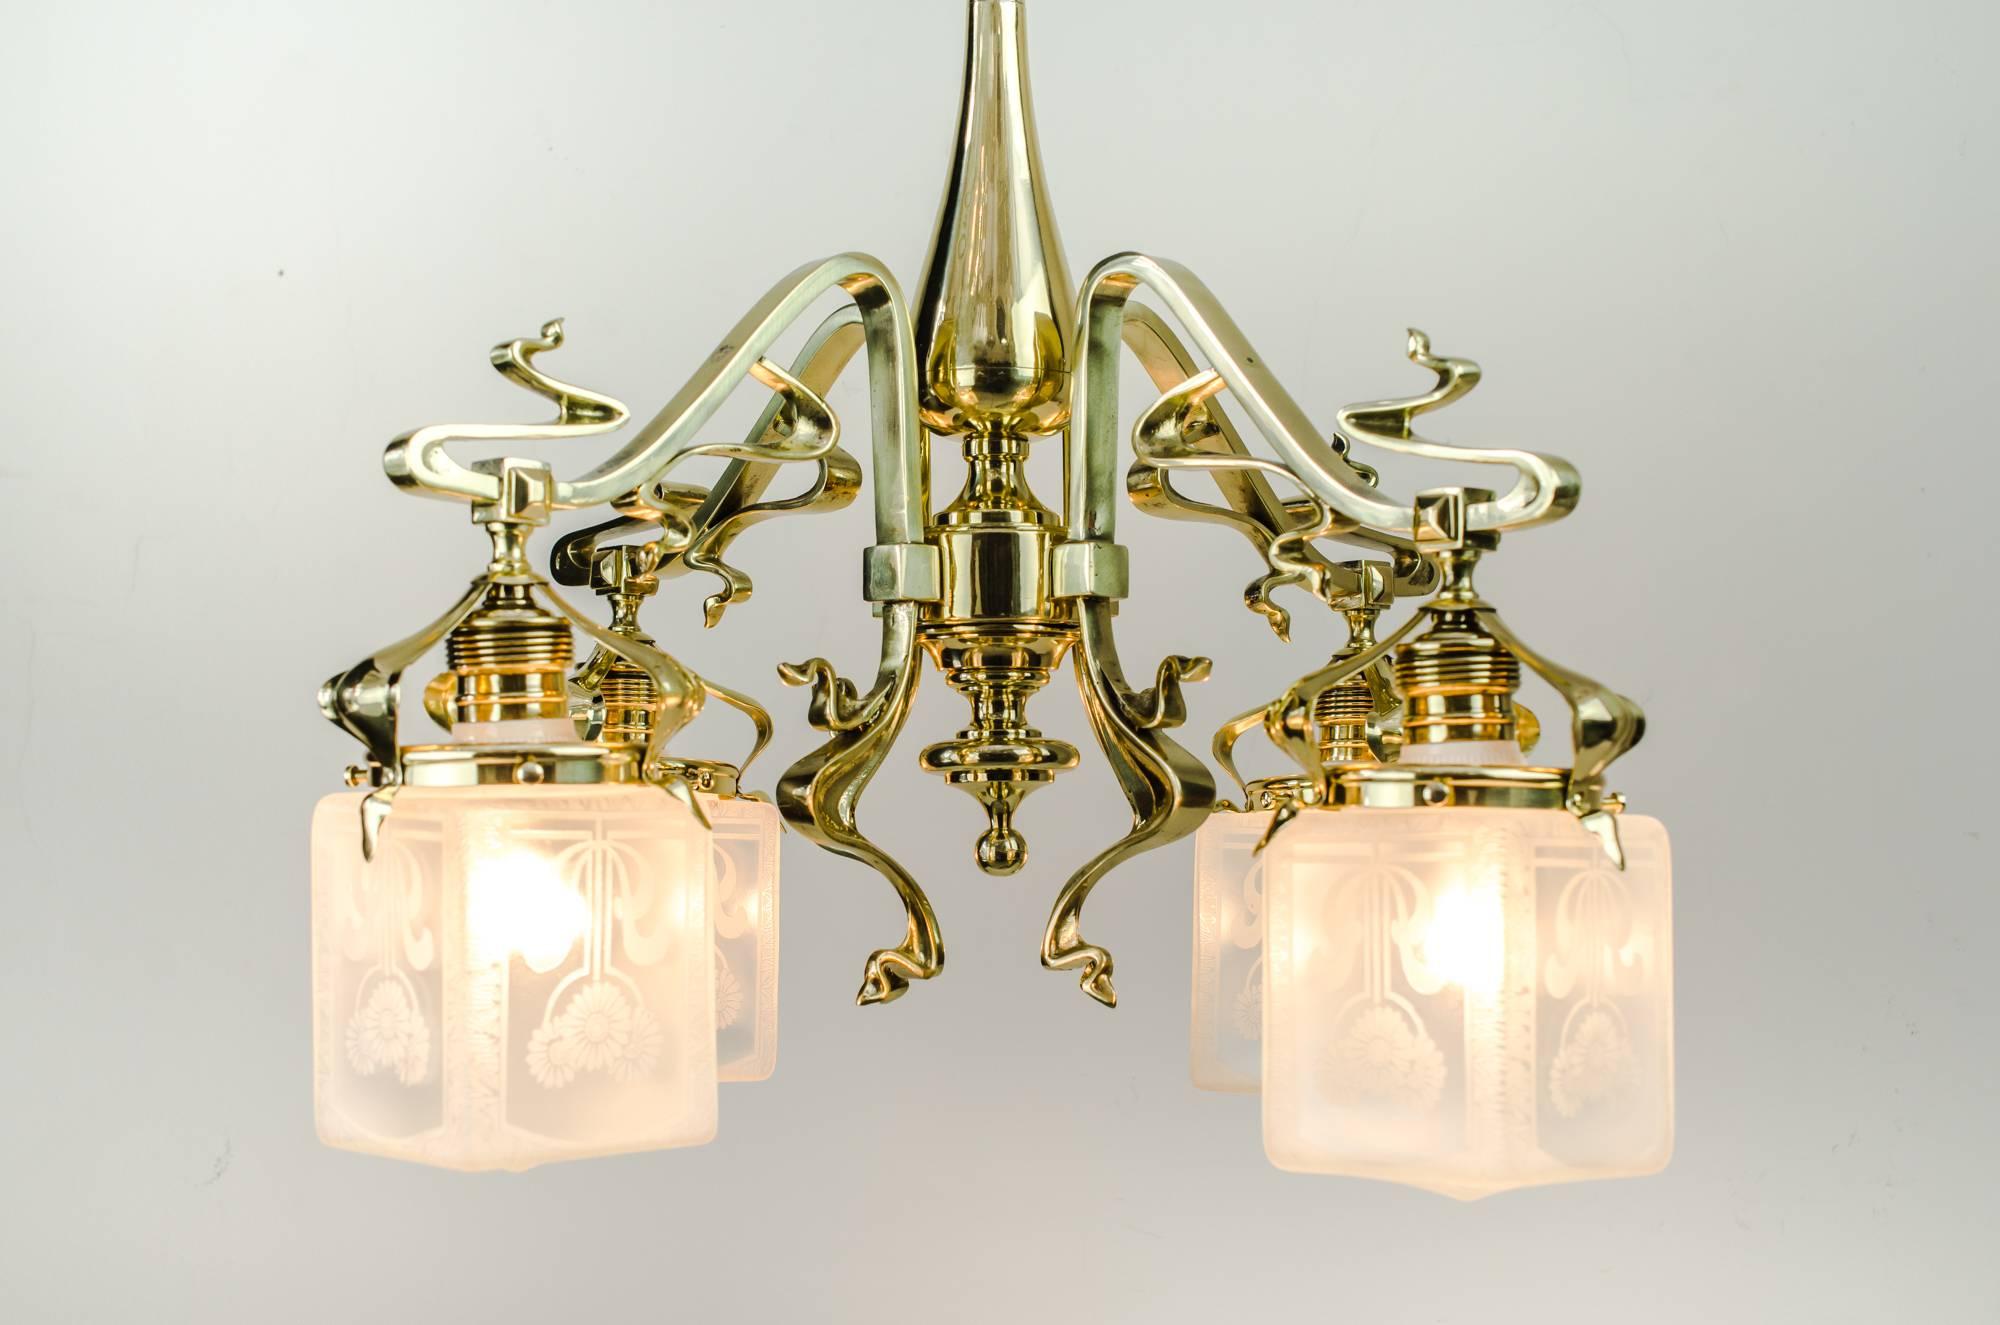 Very beautiful jugendstil floral chandelier with original glasses, circa 1908
polished and stove enamelled.